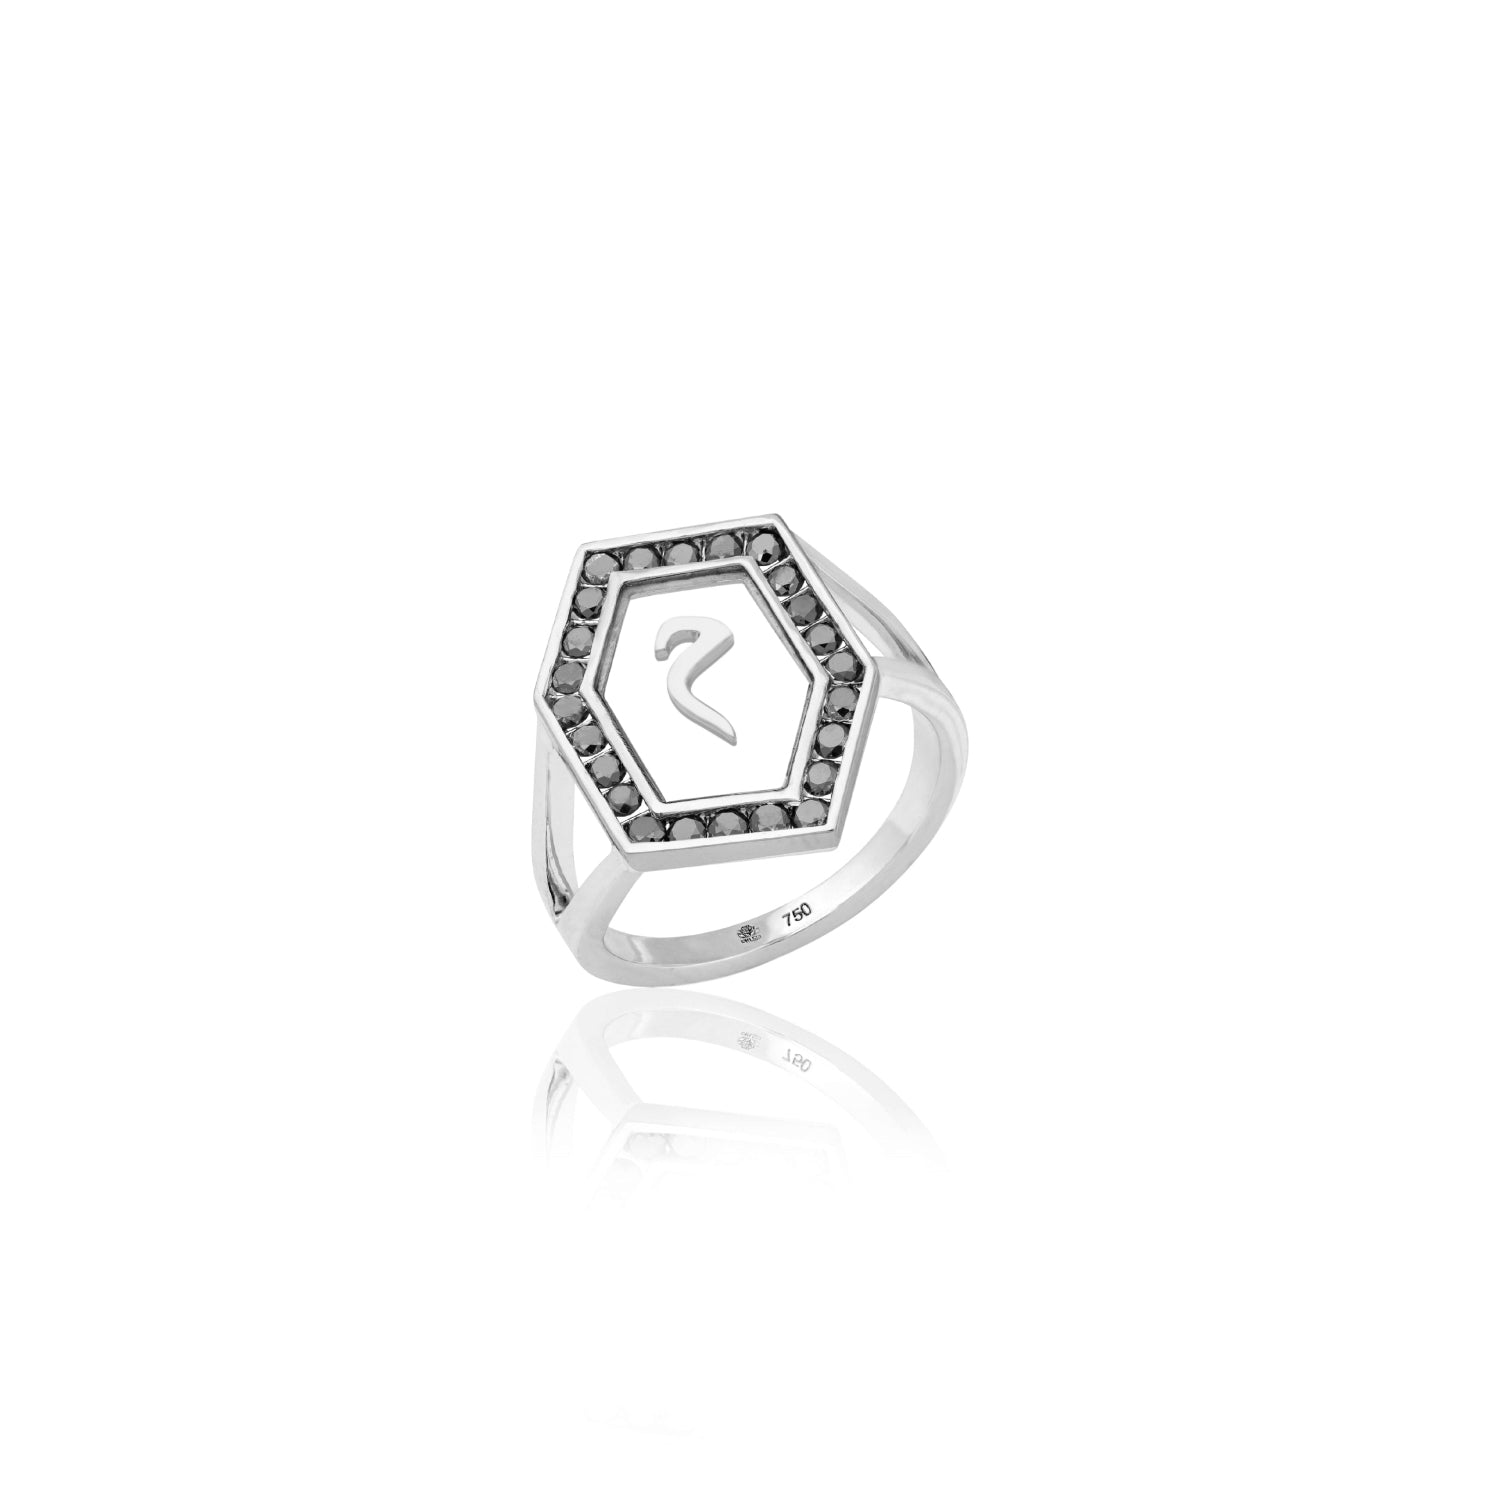 Qamoos 1.0 Letter م Black Diamond Ring in White Gold